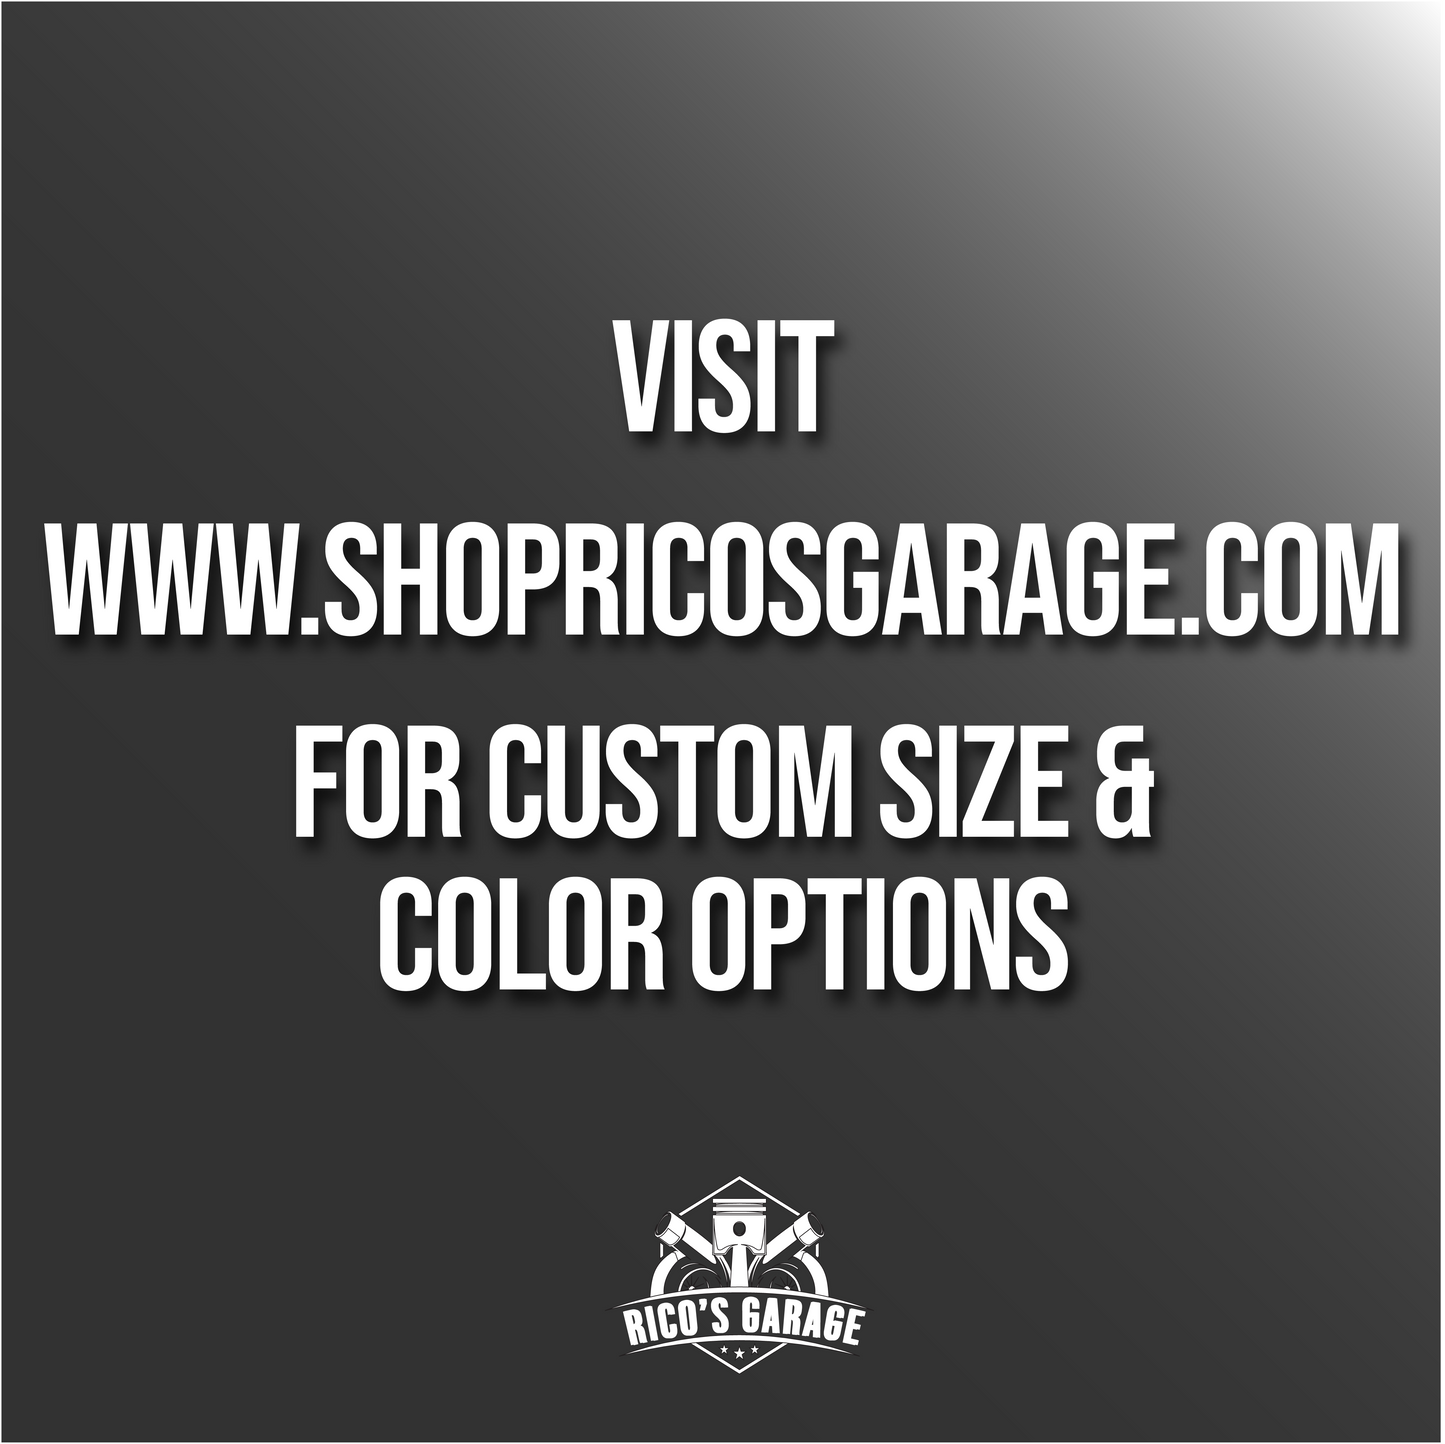 Custom Text Side Stripes (Universal Application) Livery Kit - Rico's Garage